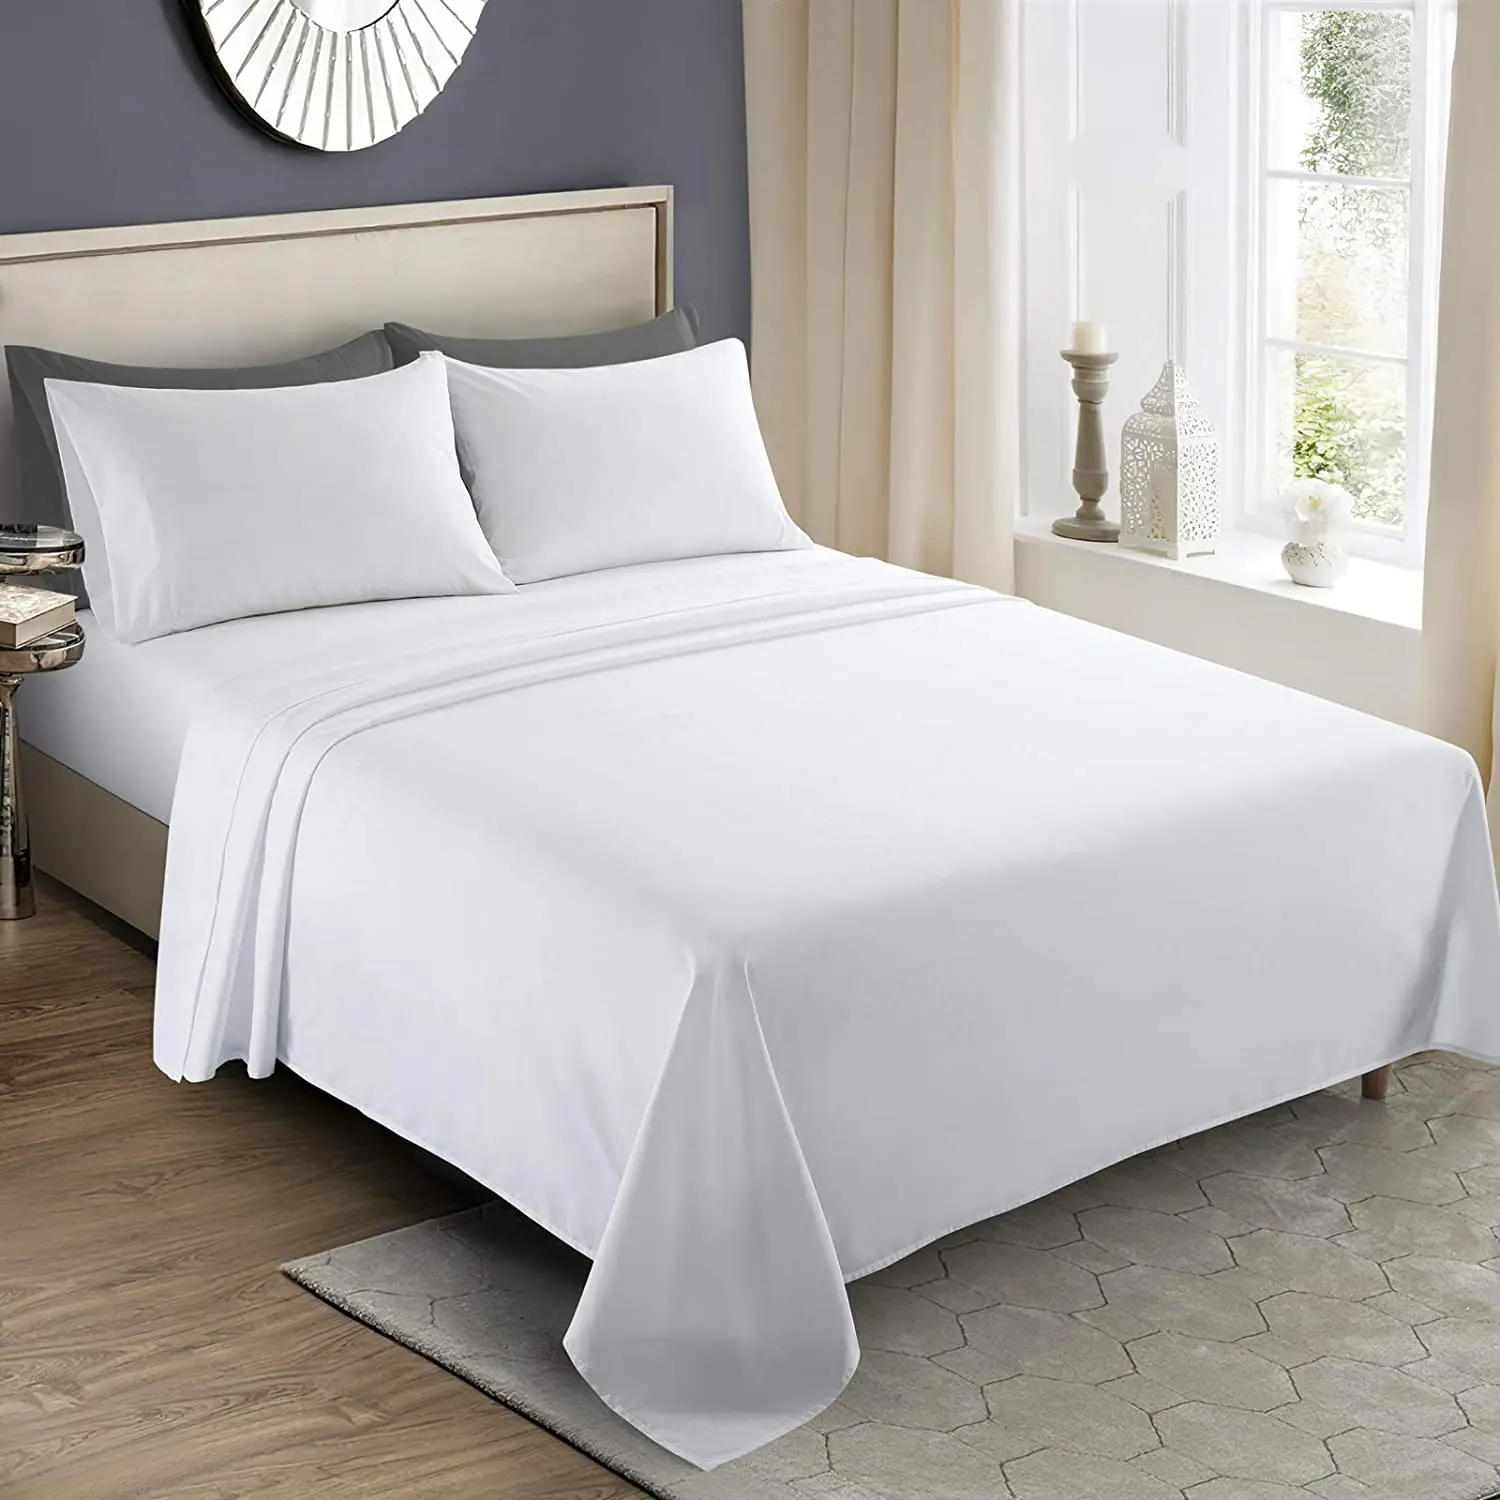 Hotel Textile Luxury Soft Microfiber Bedding Sheet 1800 Count Deep ...